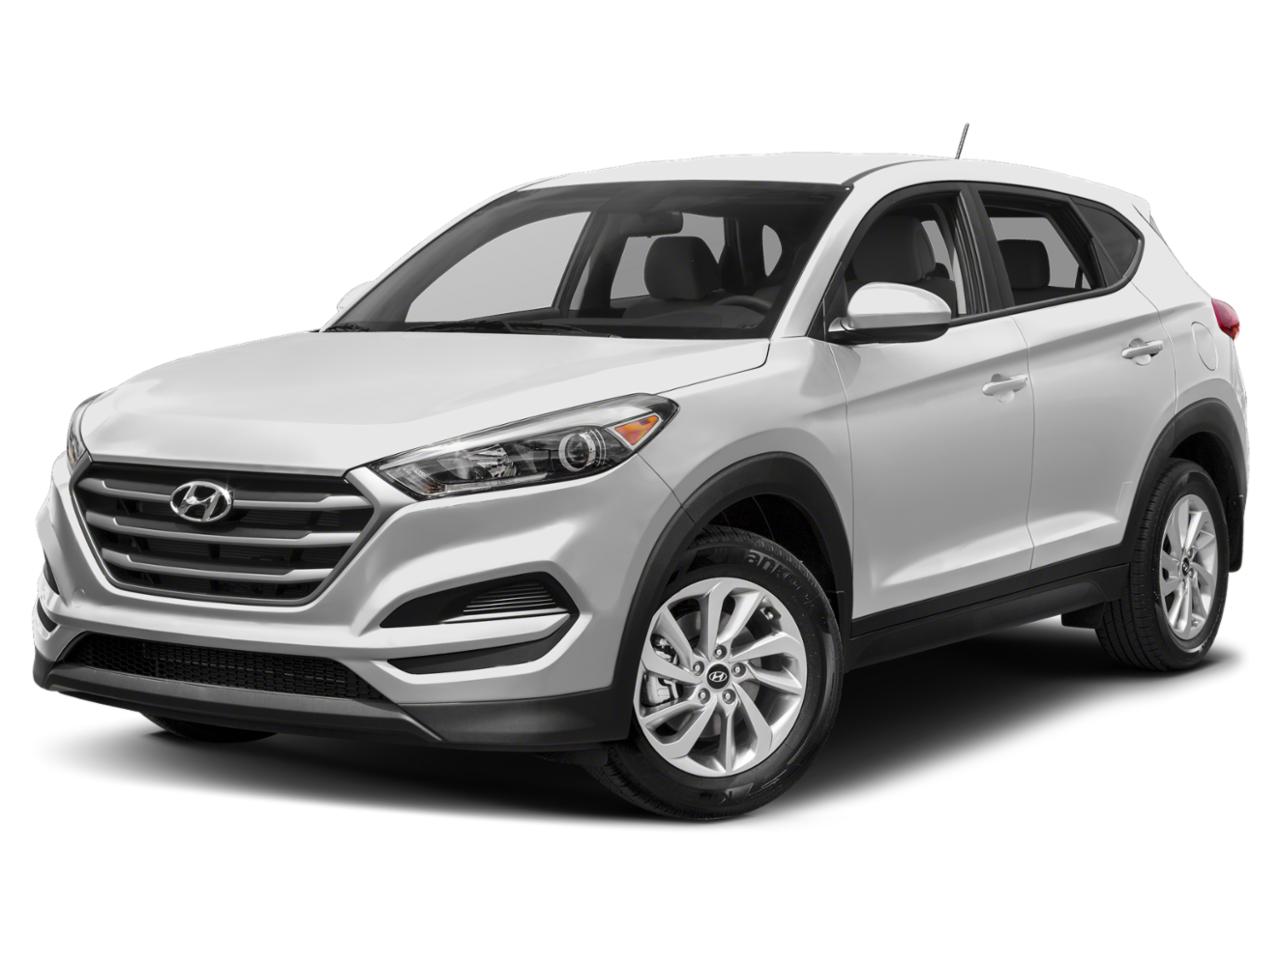 Hyundai Tucson 2018 - 2018 Hyundai Tucson / Research the 2018 hyundai ...